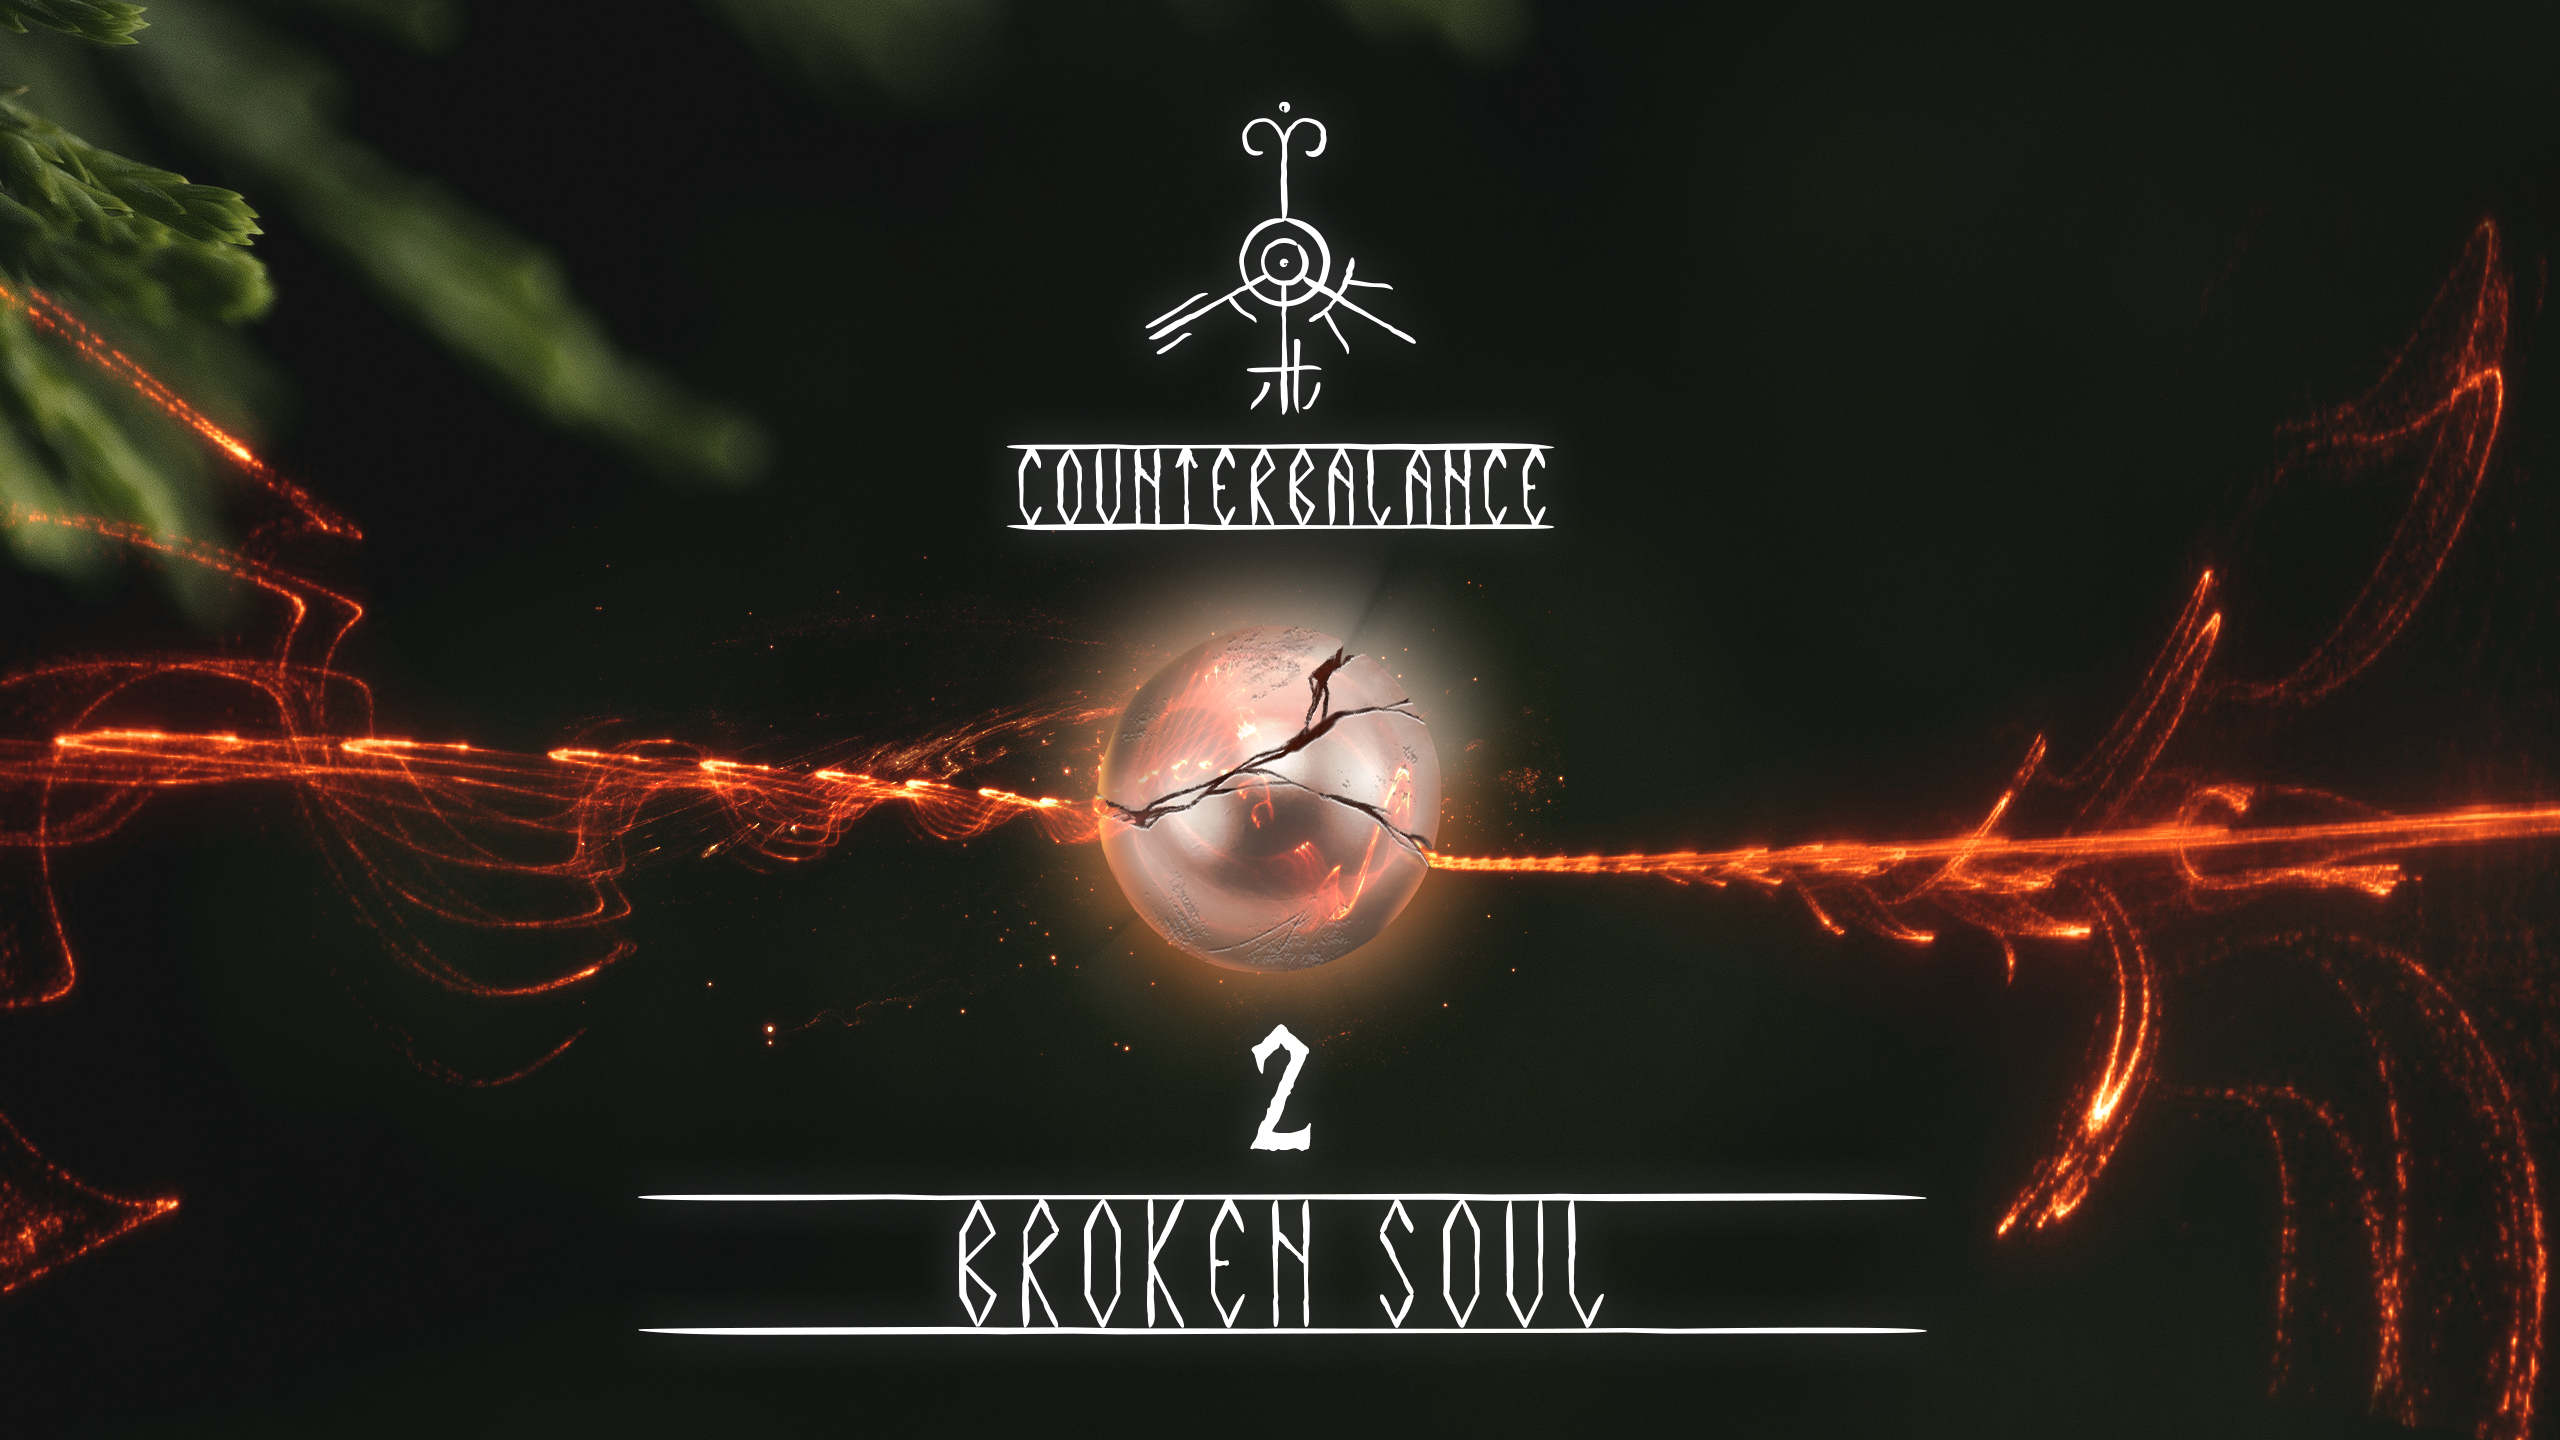 Counterbalance Cover Art Podcast Episode 02 Artwork Broken Soul